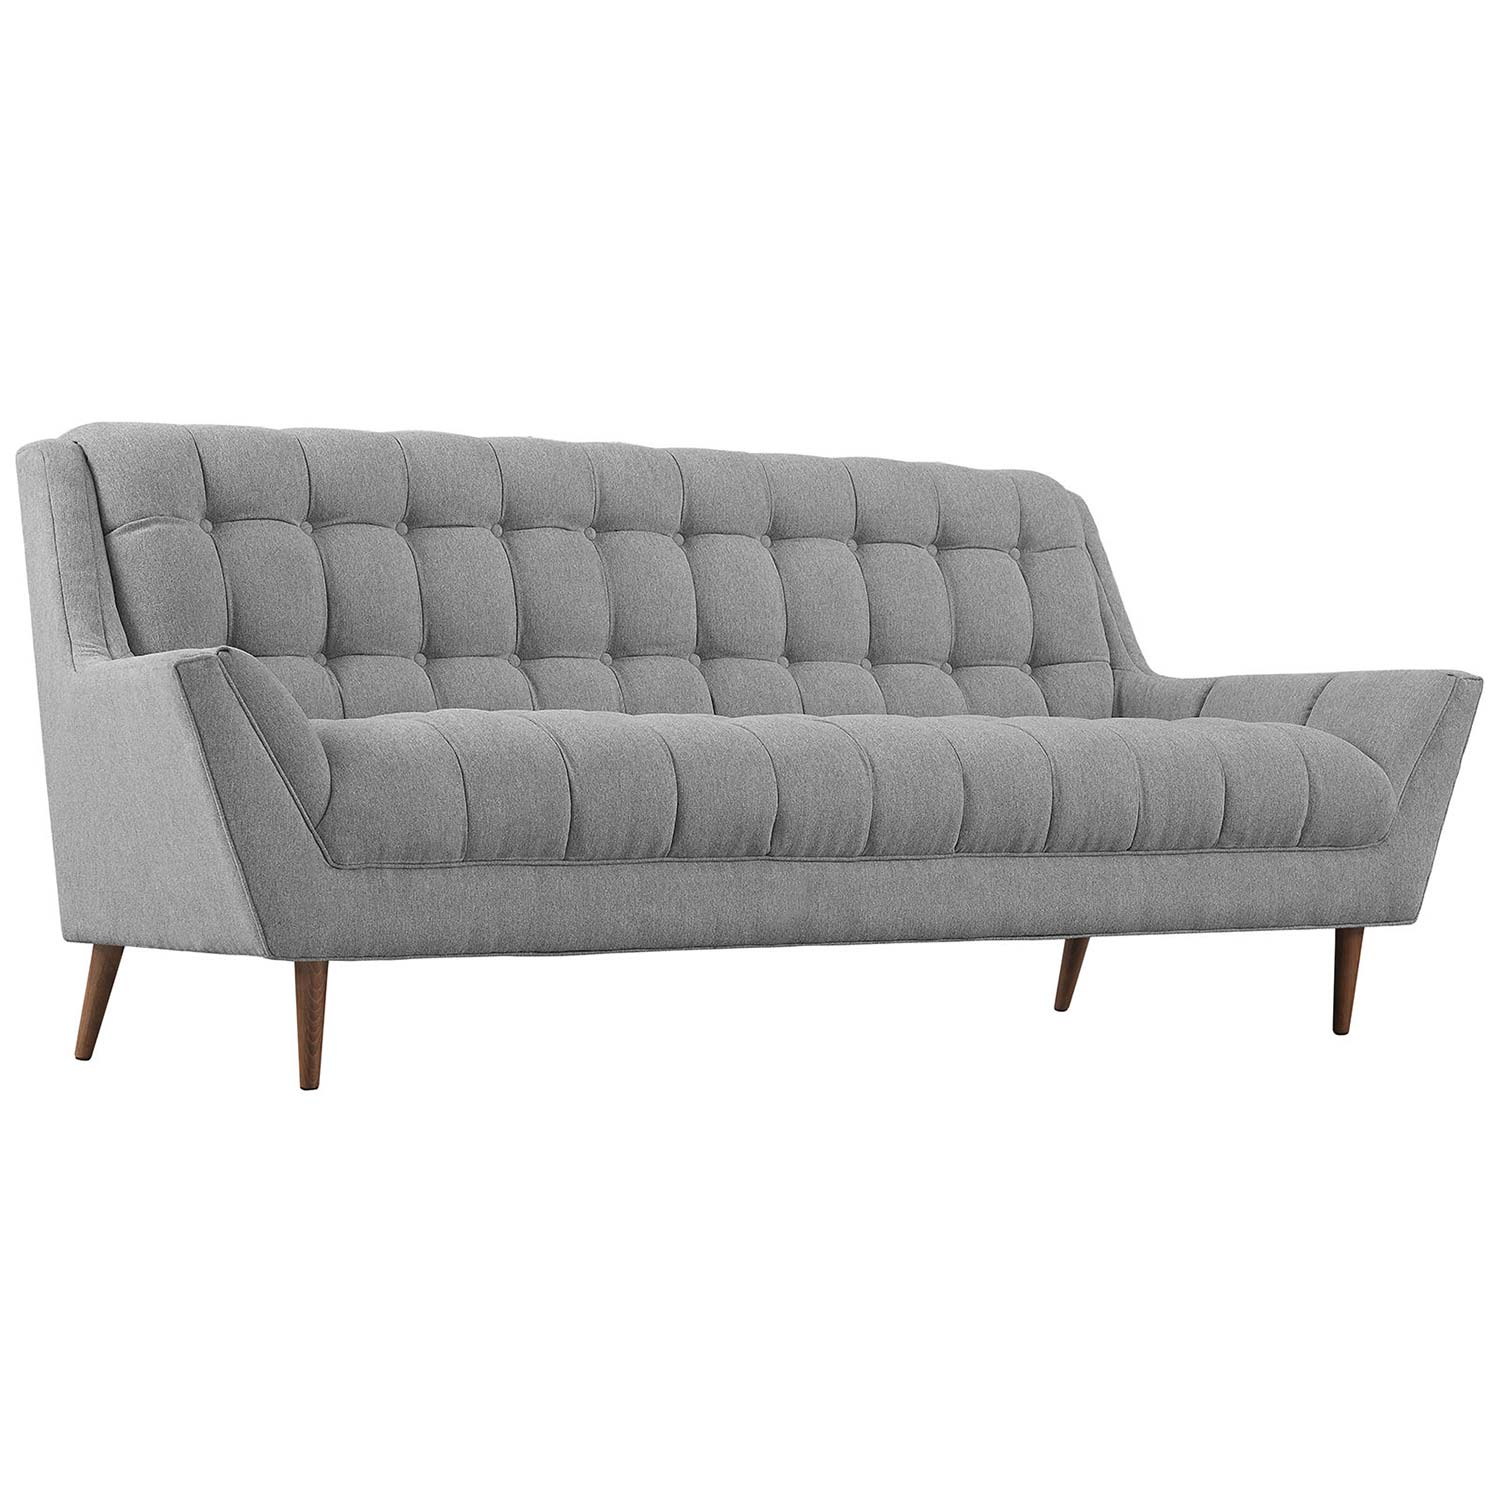 Modway Response Fabric Sofa Set - Expectation Gray